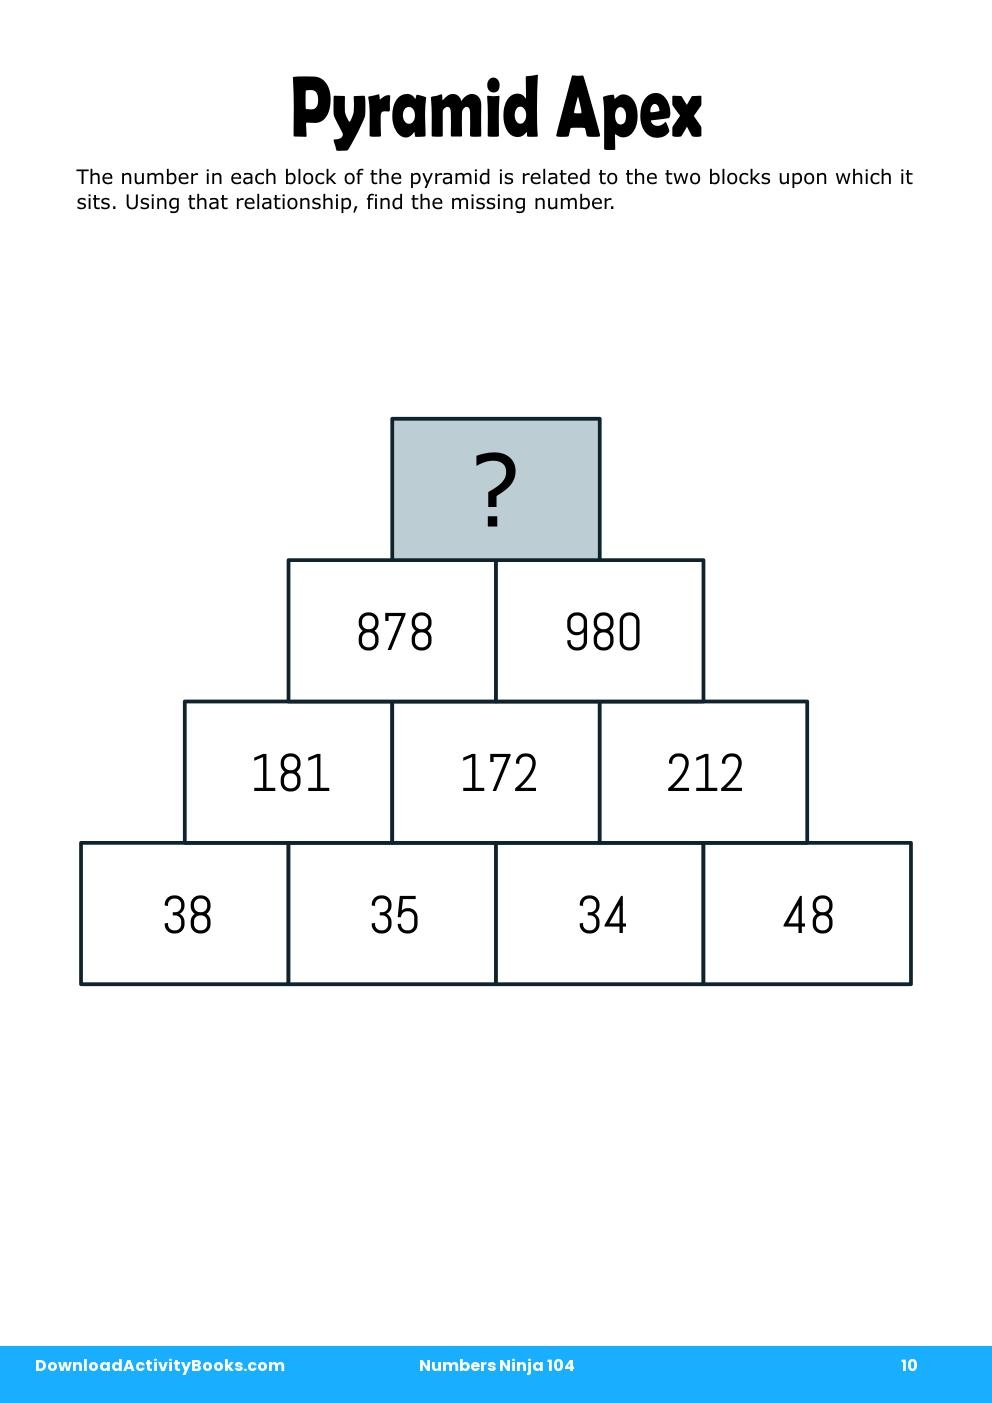 Pyramid Apex in Numbers Ninja 104